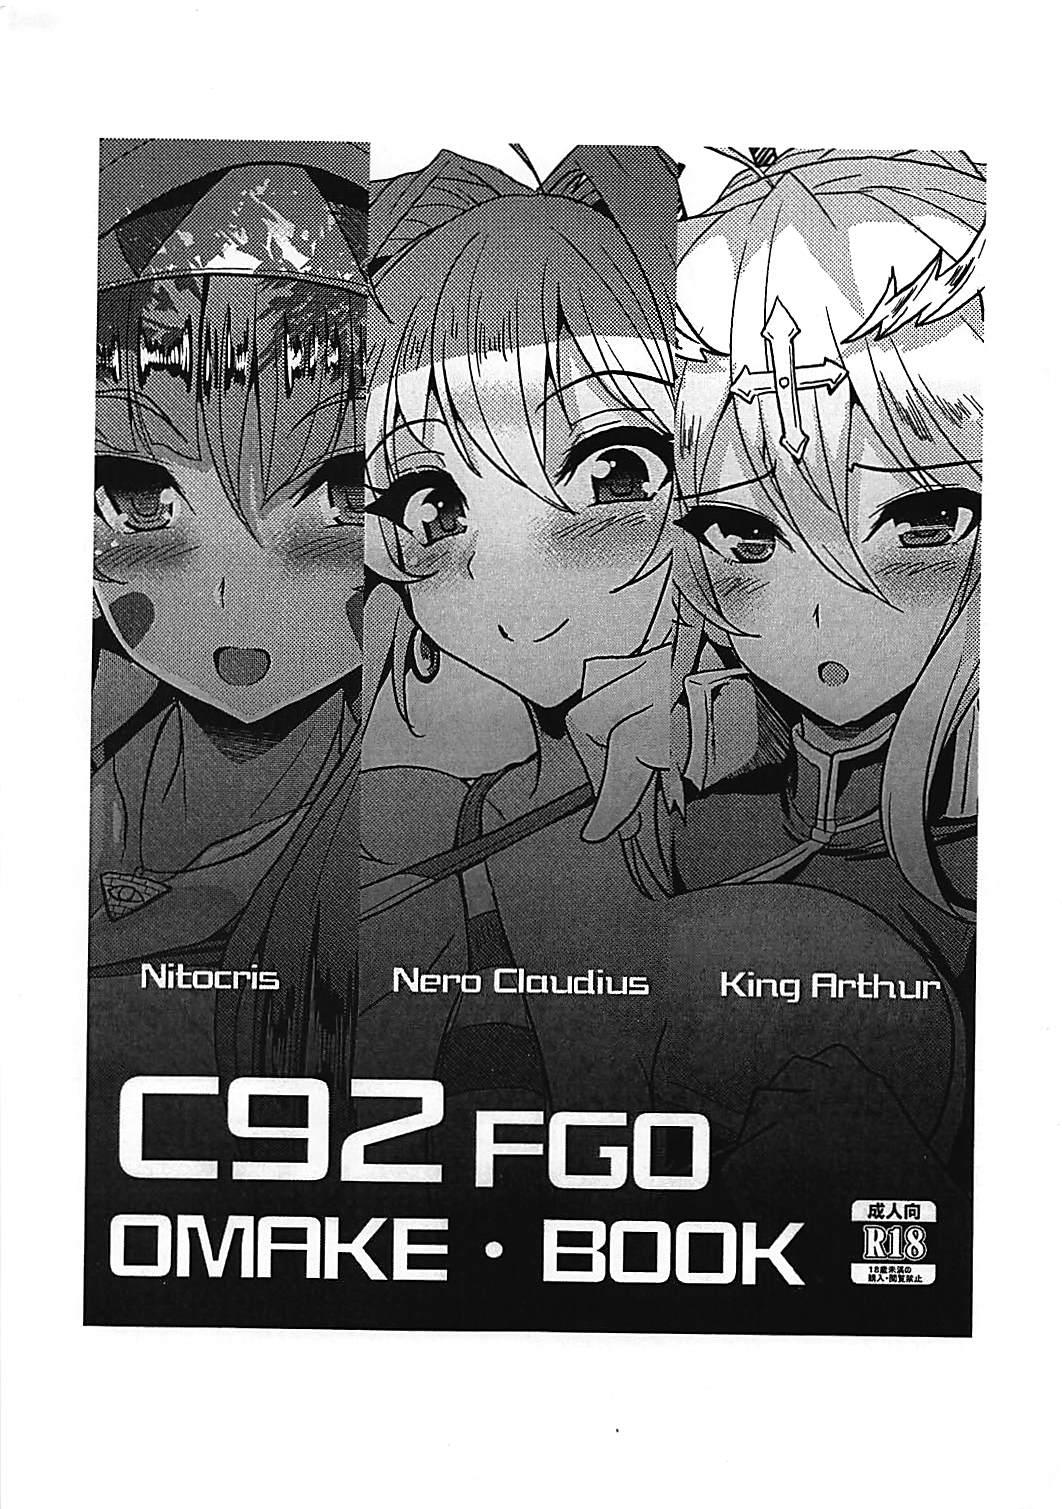 C92 FGO OMAKE BOOKS 1